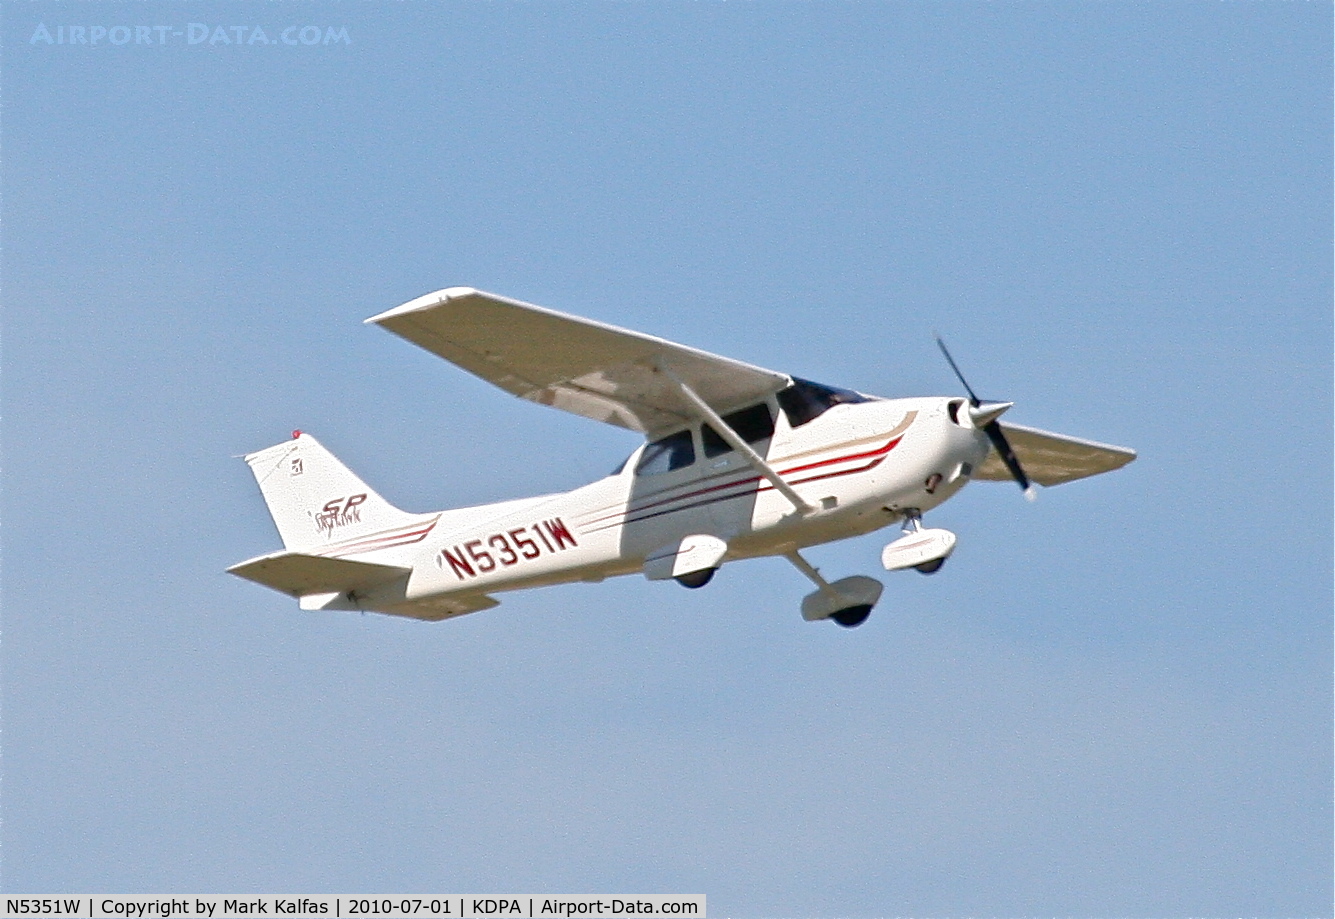 N5351W, 2003 Cessna 172S C/N 172S9381, Cessna 172S Skyhawk, N5351W departing 20R KDPA.